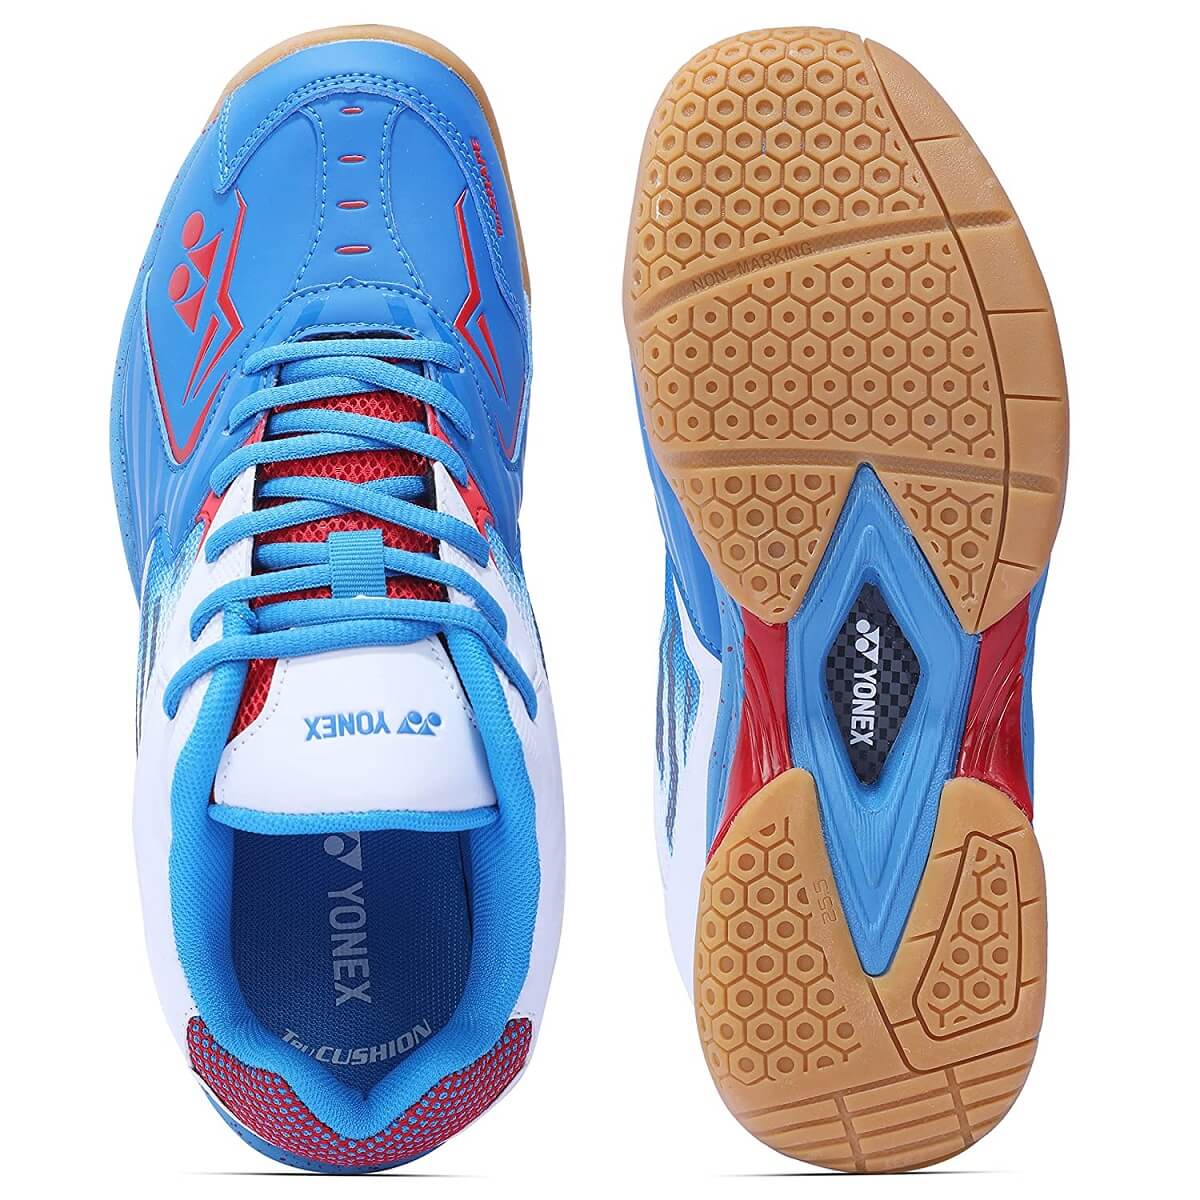 Yonex All England 21 Badminton Shoes (Pearlized Blue/Perlized White ...